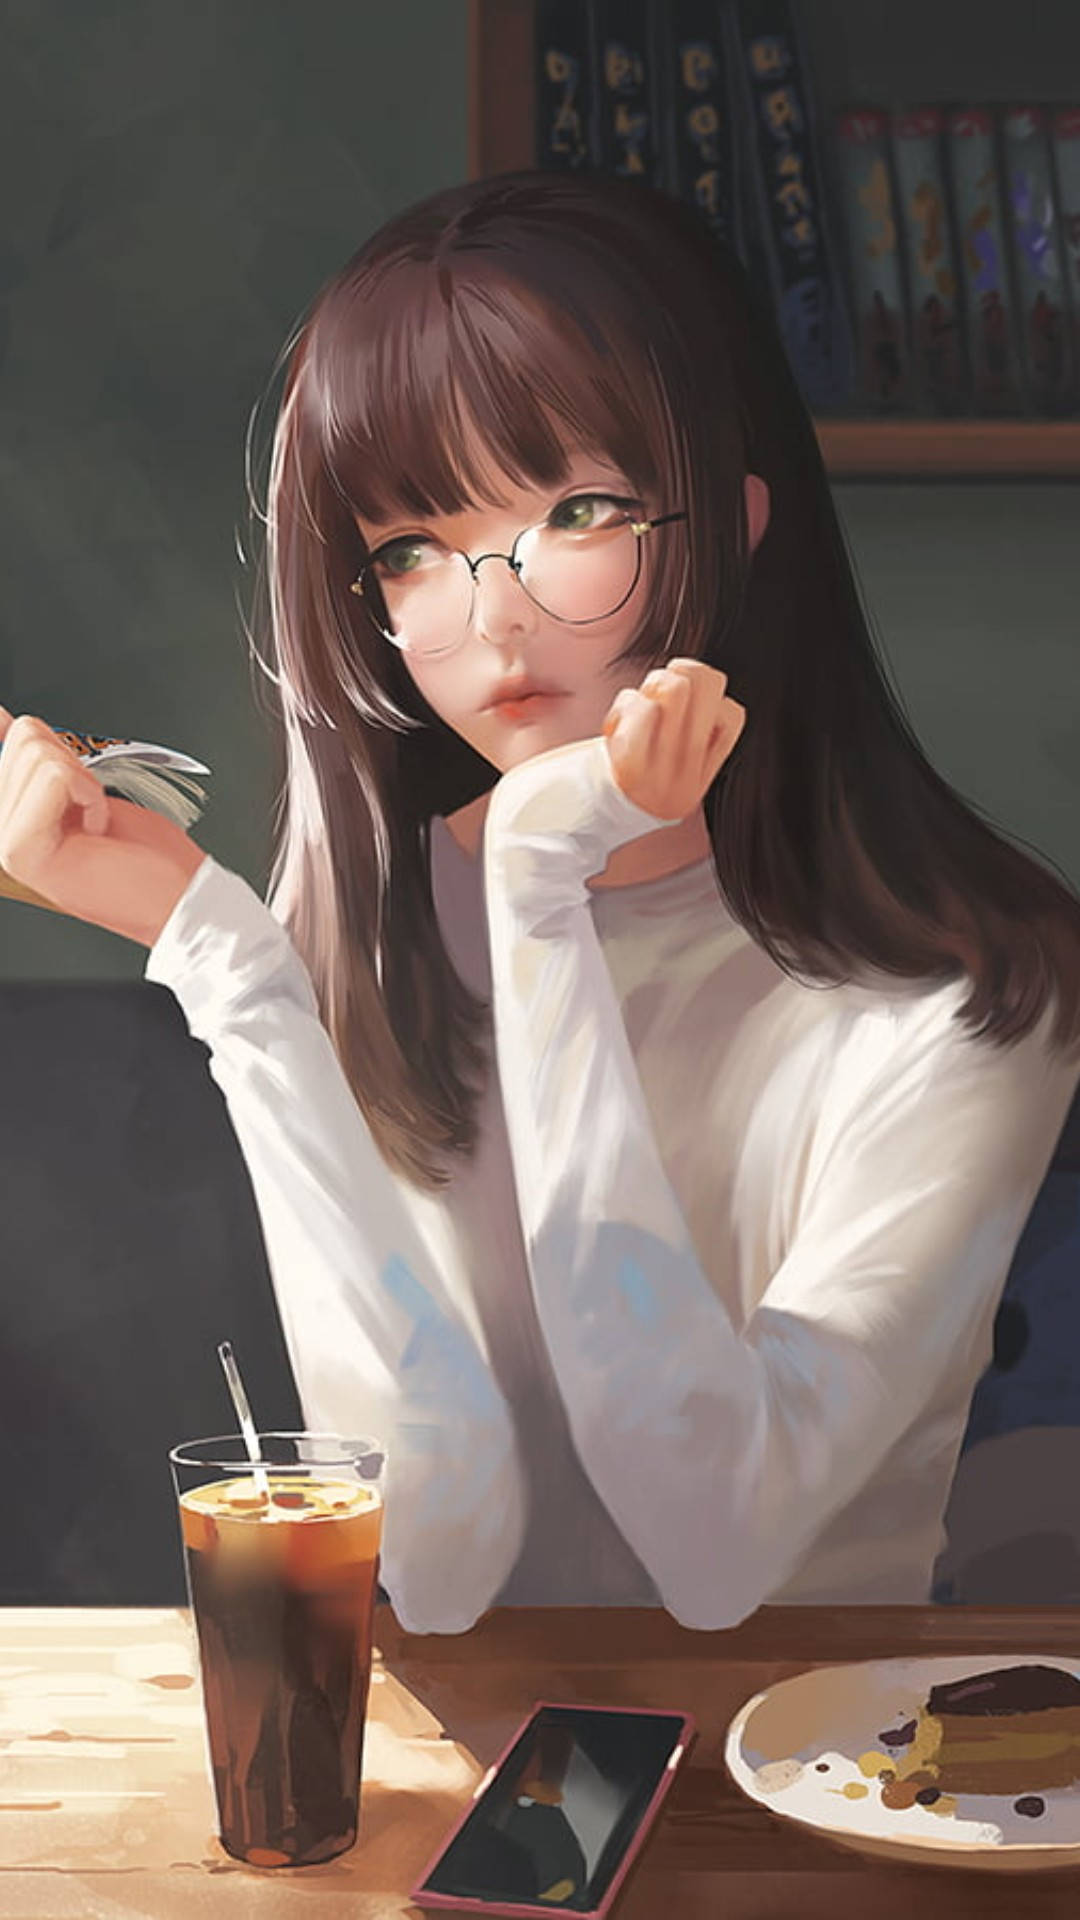 Coffee And Anime Girl Phone Wallpaper